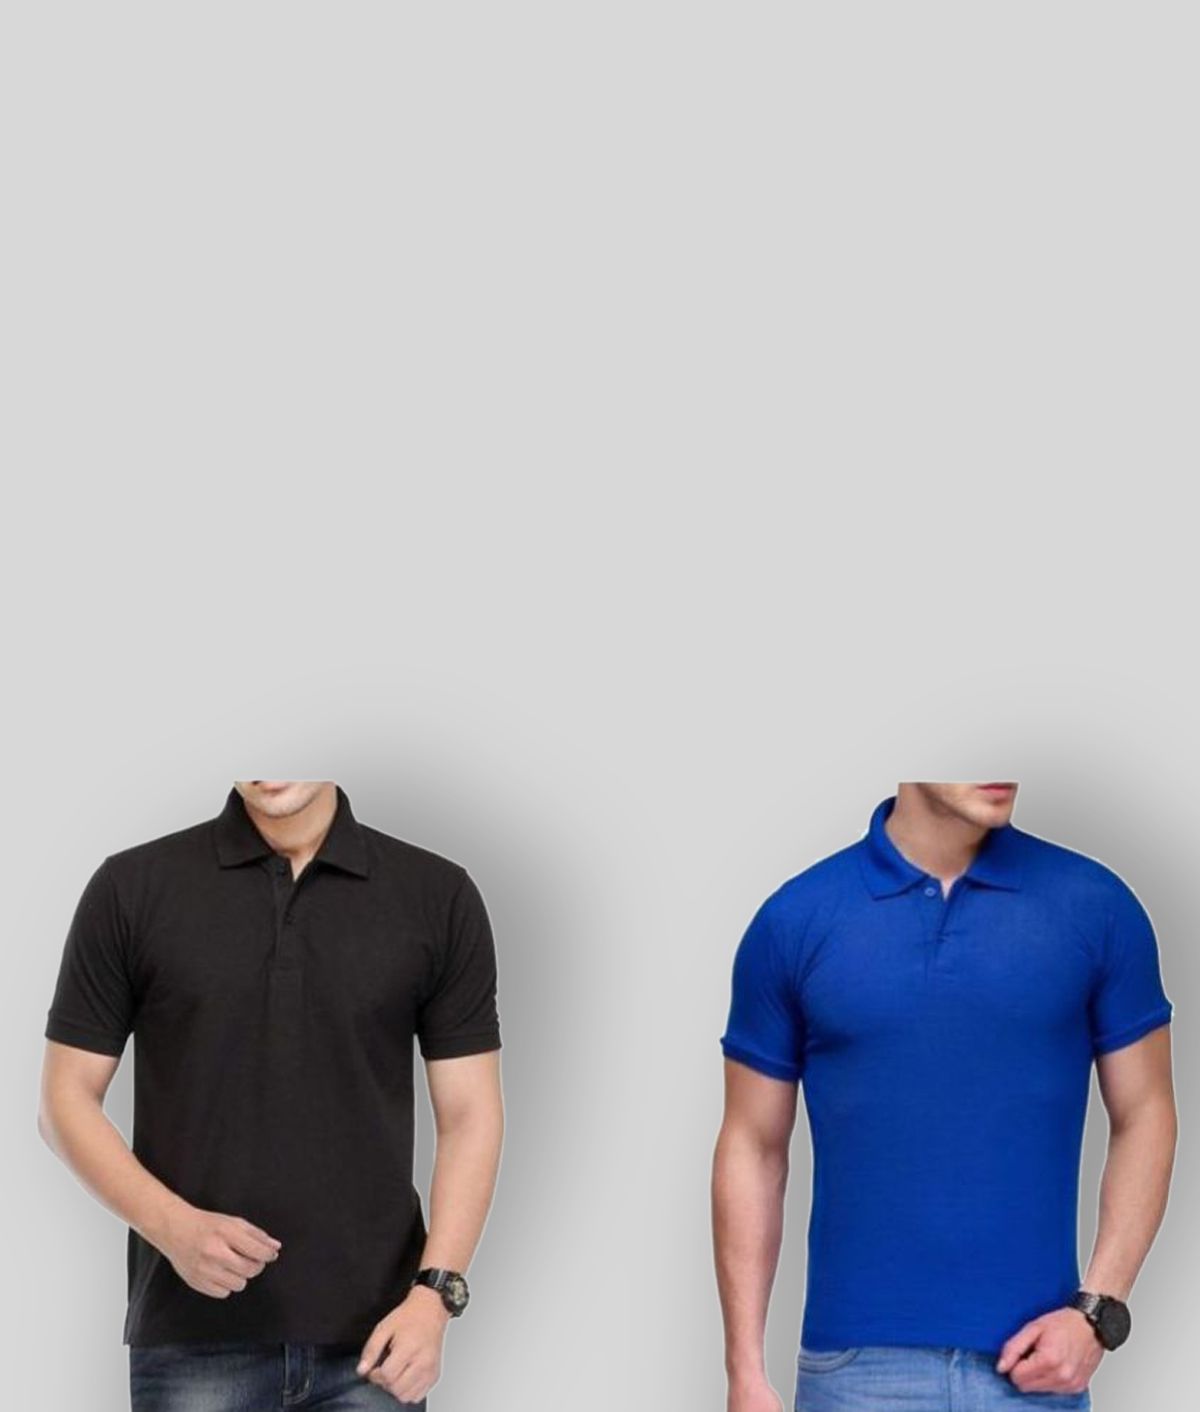     			FASHION365 - Multicolor Cotton Blend Slim Fit Men's Polo T Shirt ( Pack of 2 )